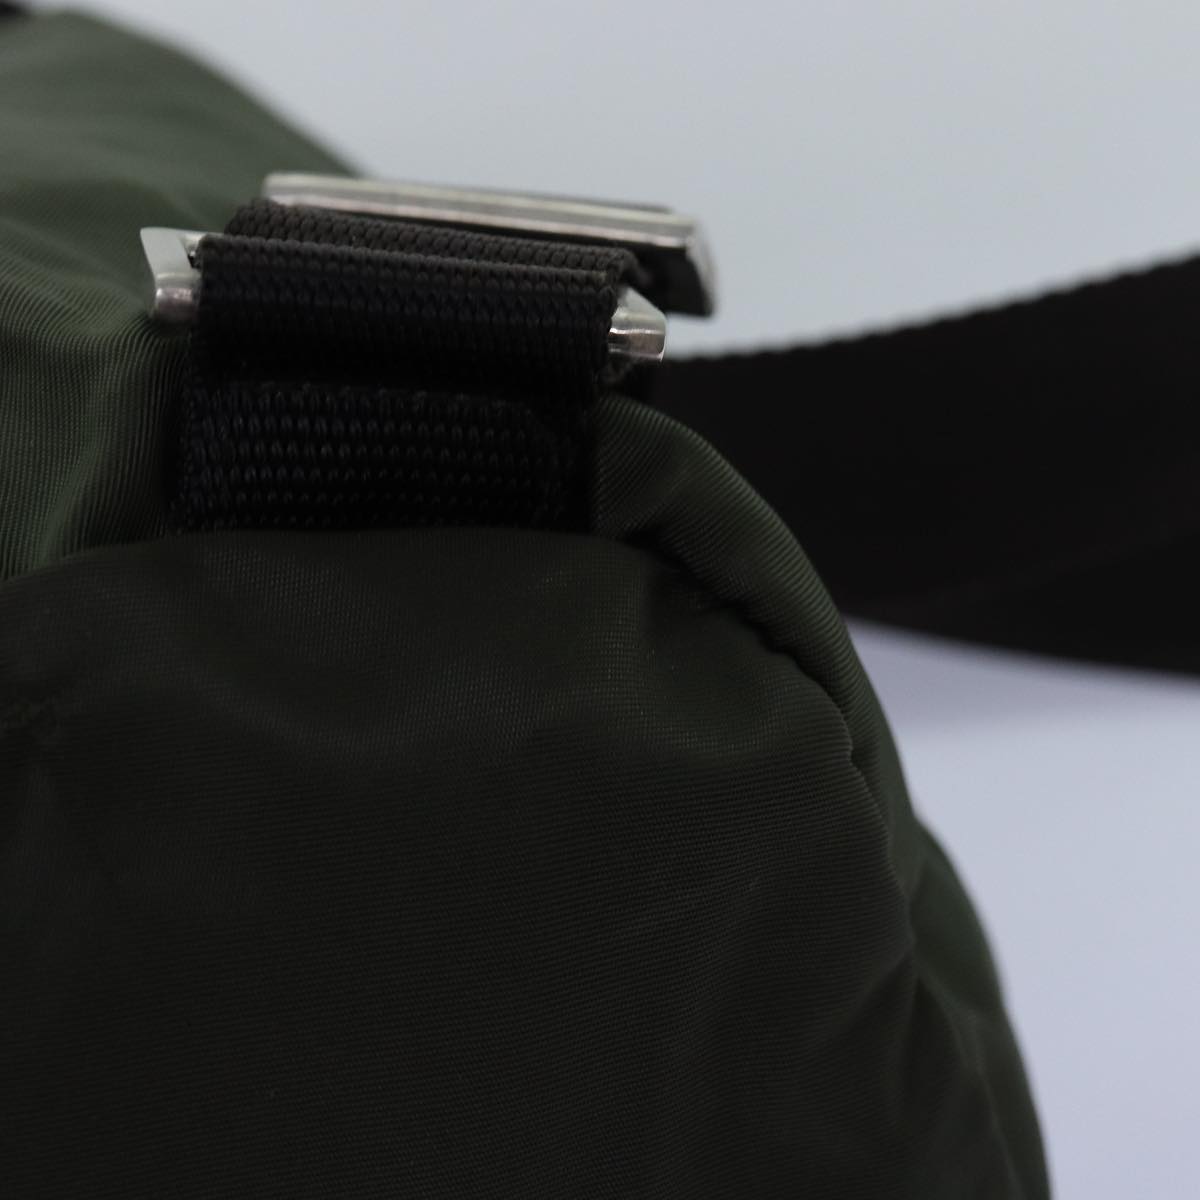 PRADA Backpack Nylon Khaki Auth 75230